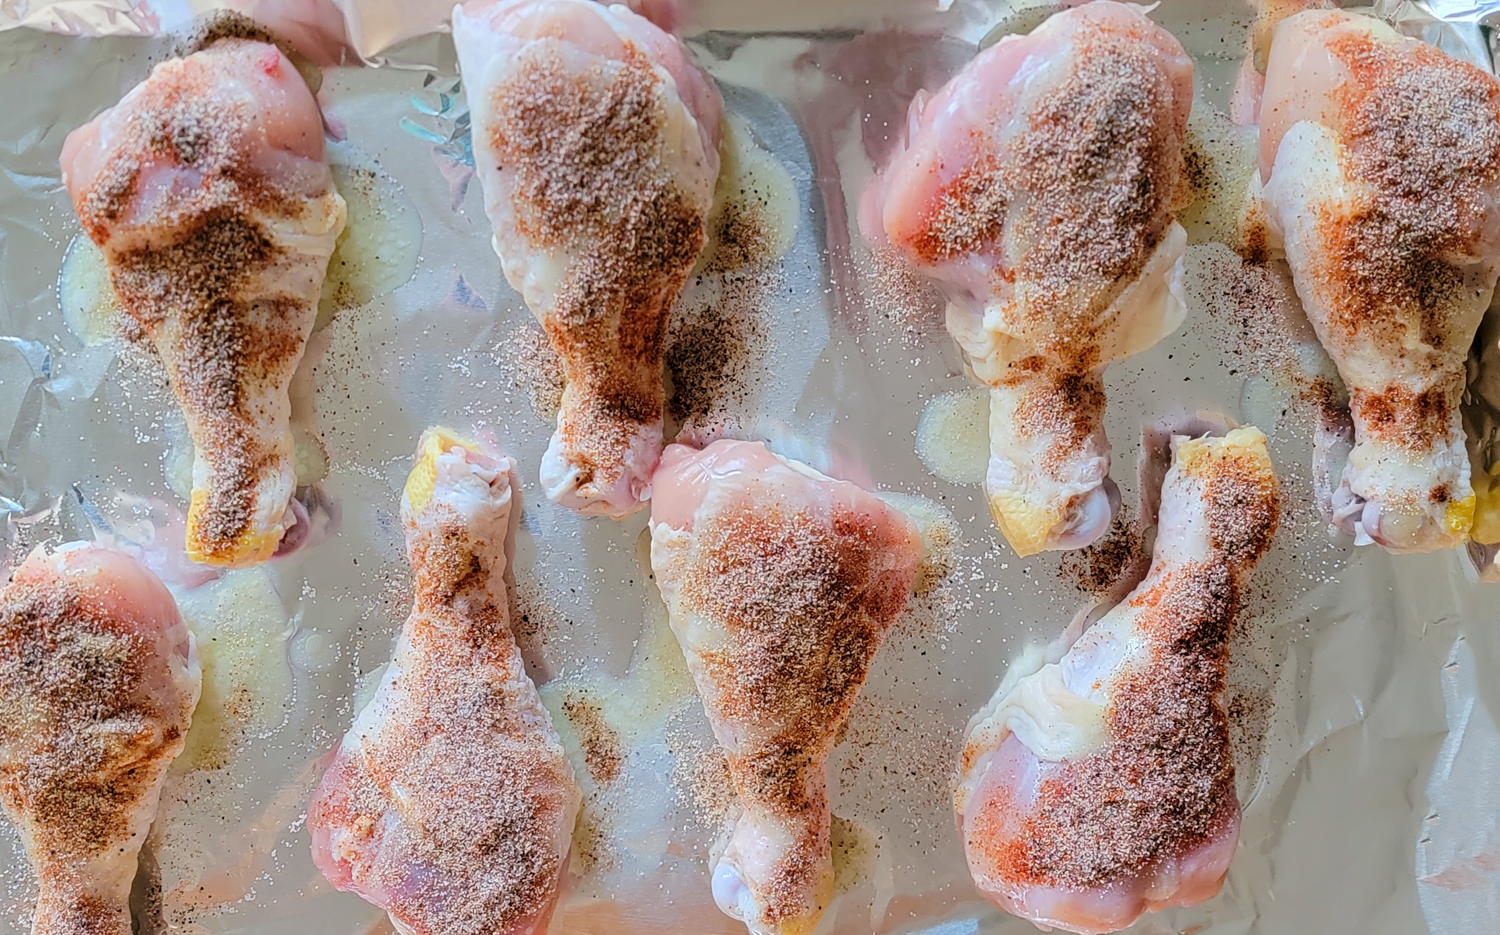 dry rub for chicken legs on baking sheet 